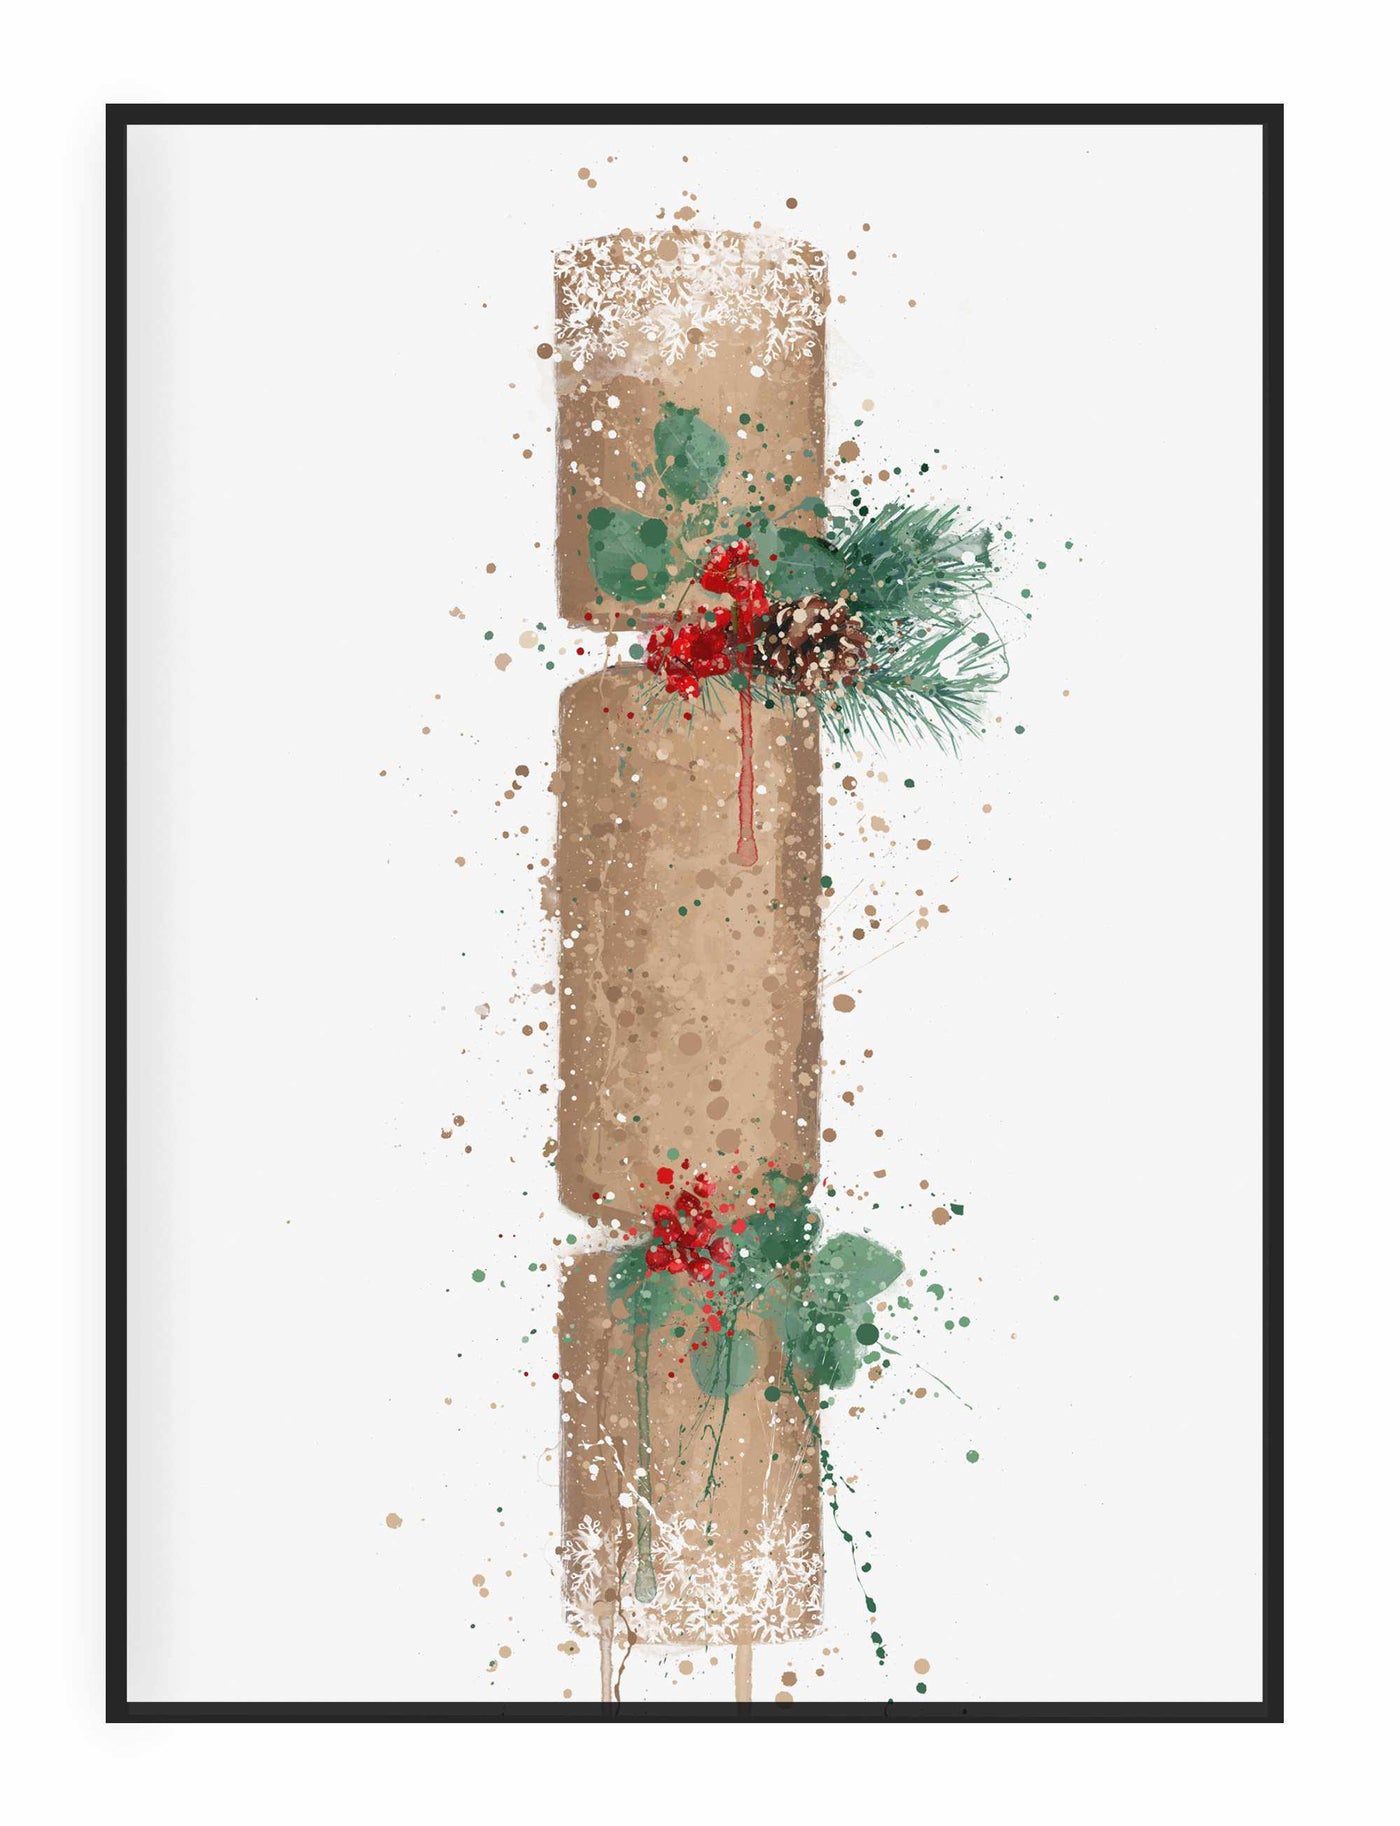 Christmas Cracker Wall Art Print, Contemporary and Stylish Christmas Decoration Alternative Xmas Decor